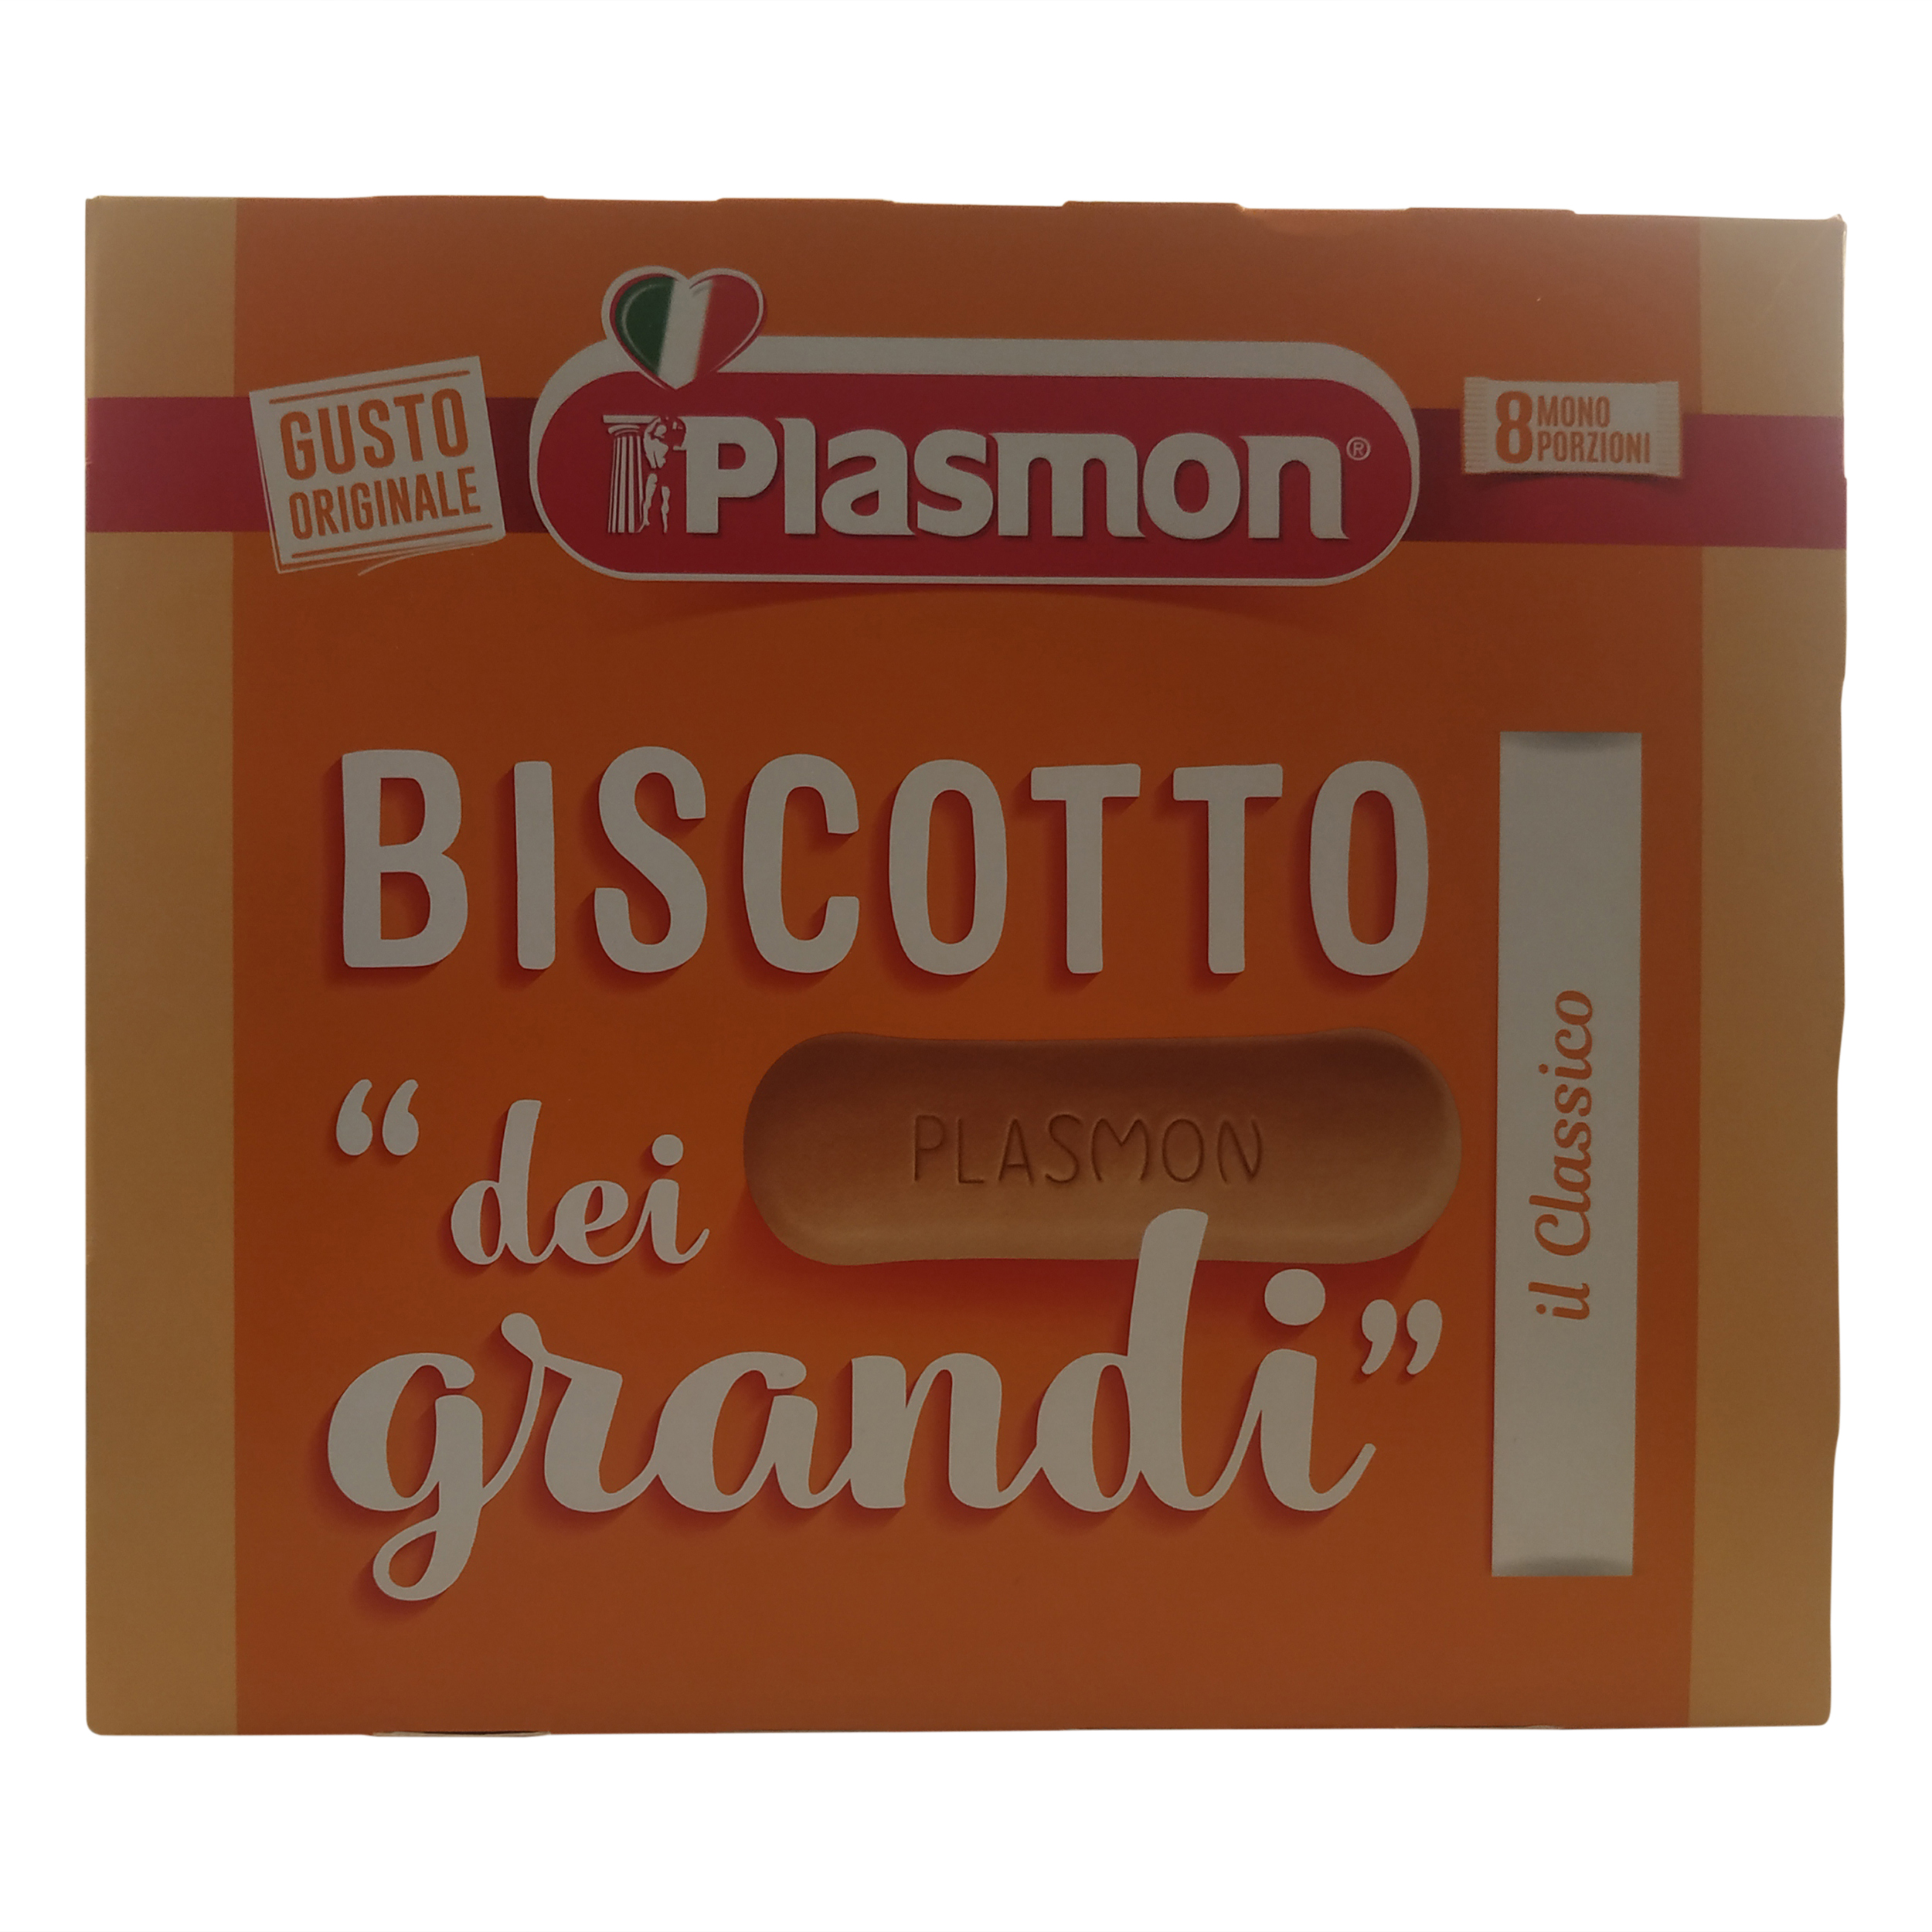 Plasmon Biscotti, Plasmon Cookies, Plasmon, Biscuit “of the great” the  Classico, Plasmon